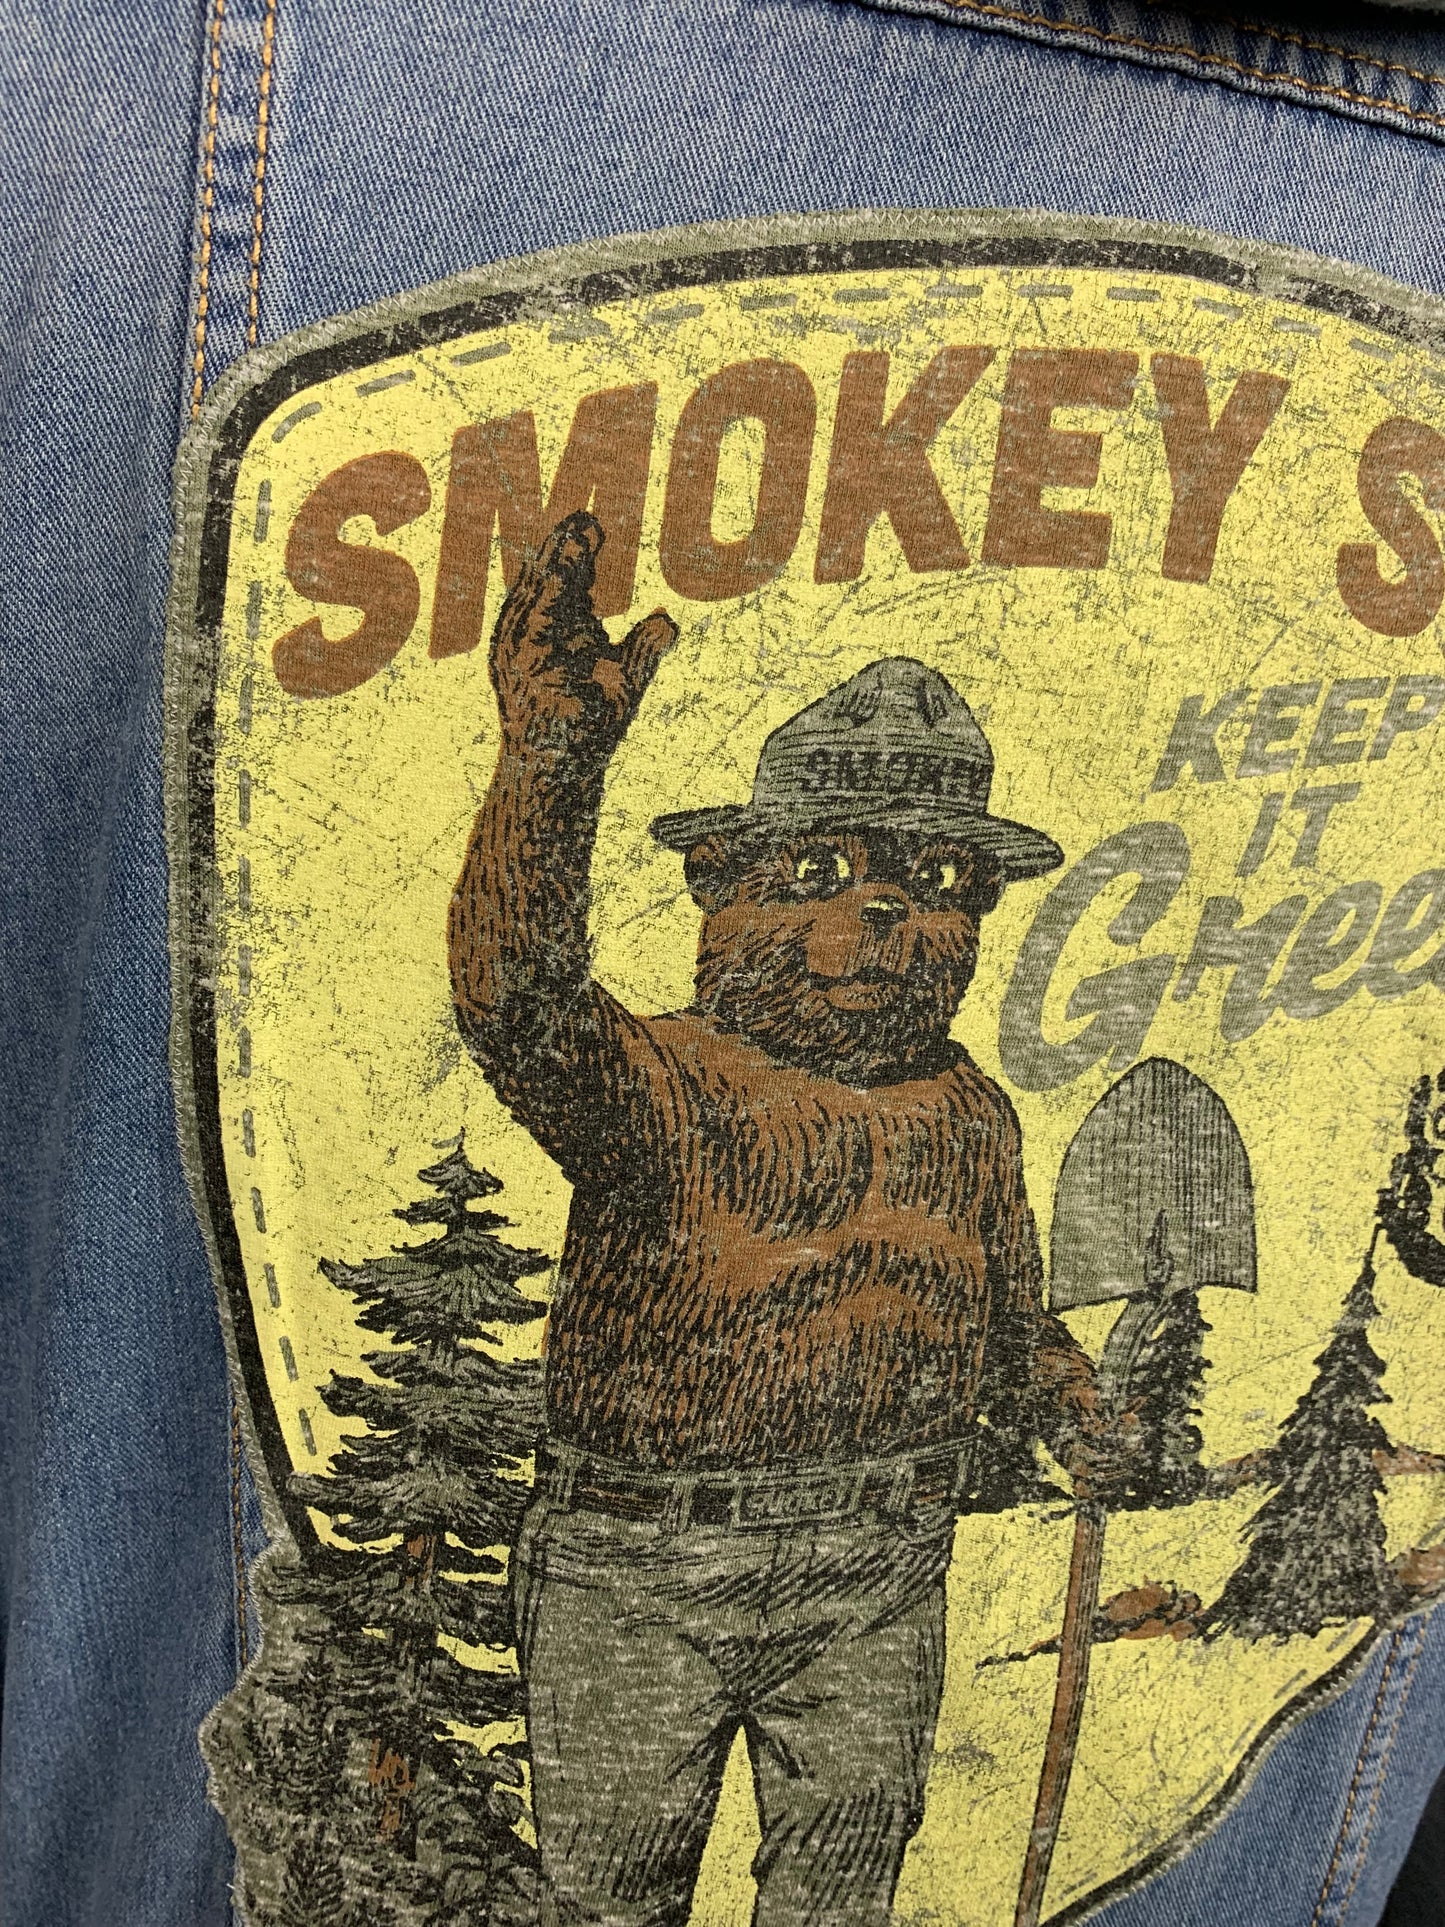 Smokey Says Keep It Green Jean Jacket Custom Rework M